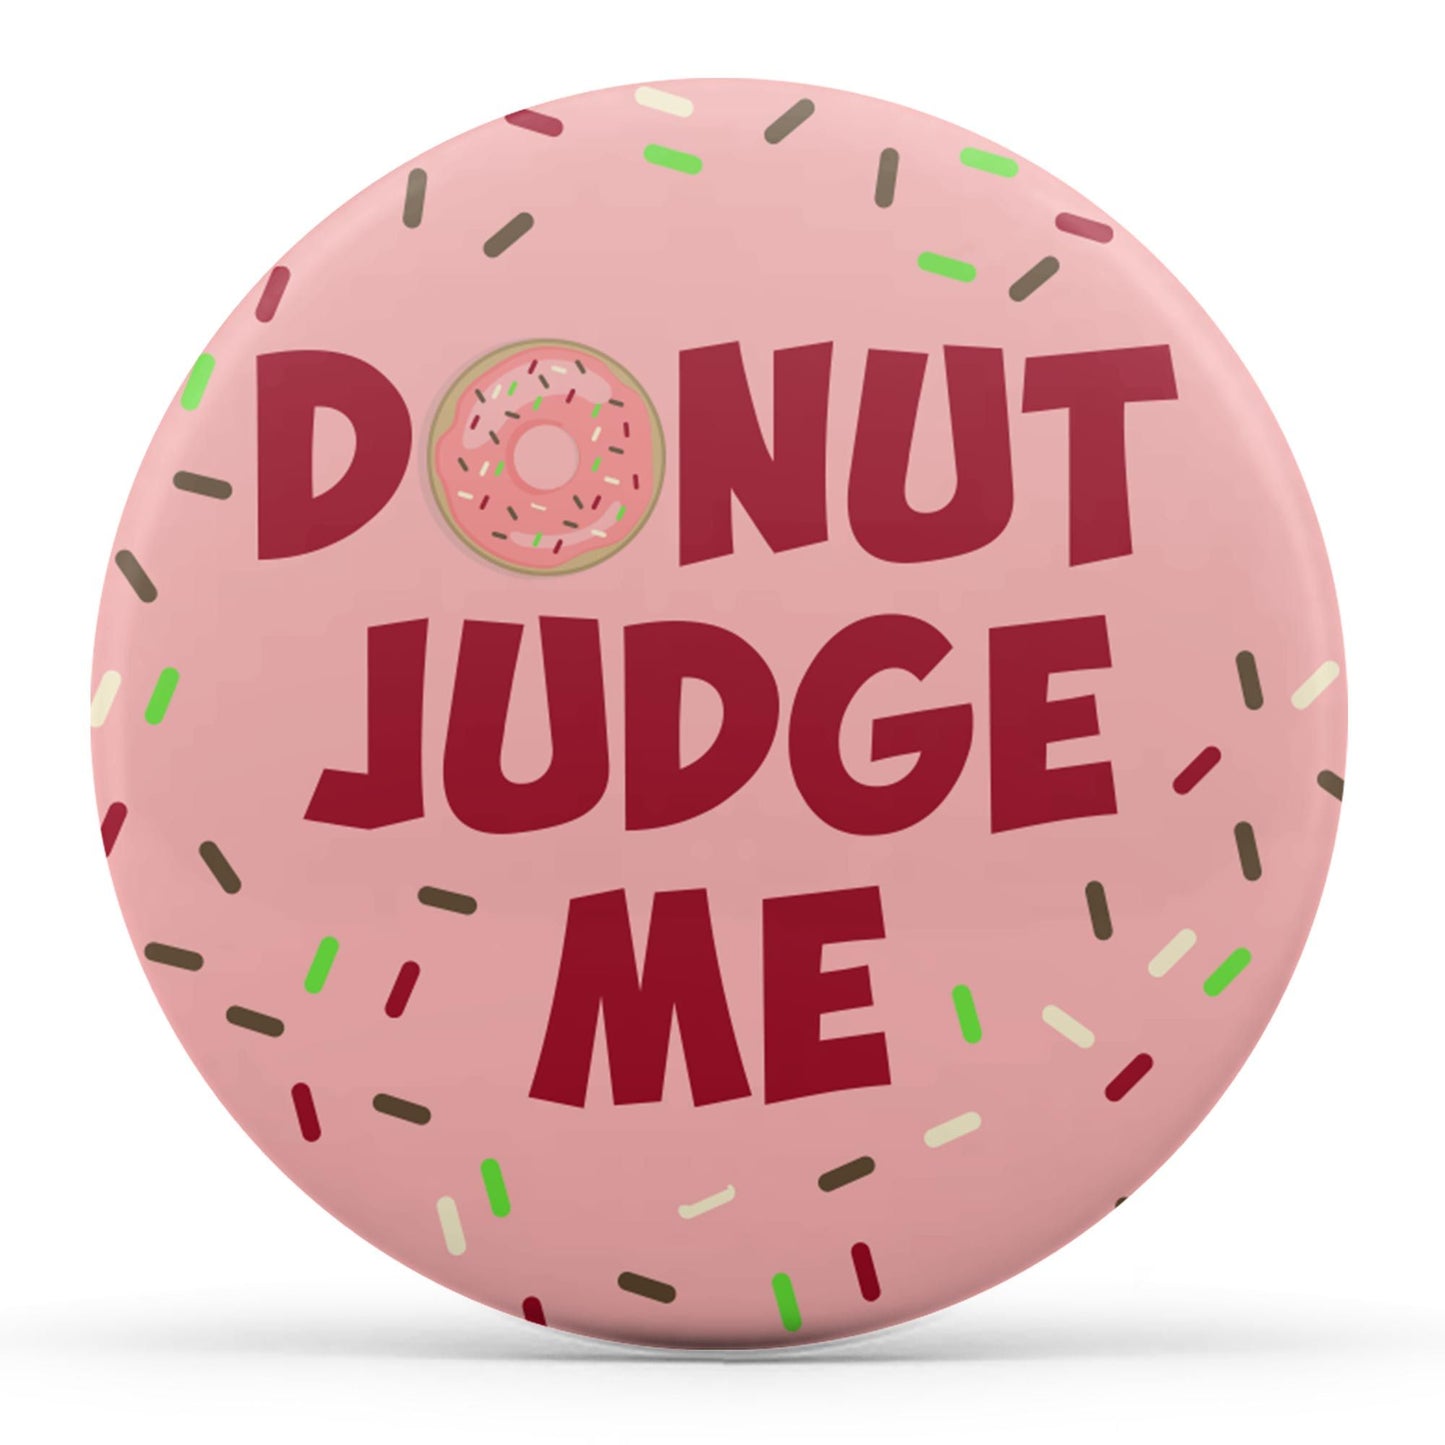 Donut Judge Me Image